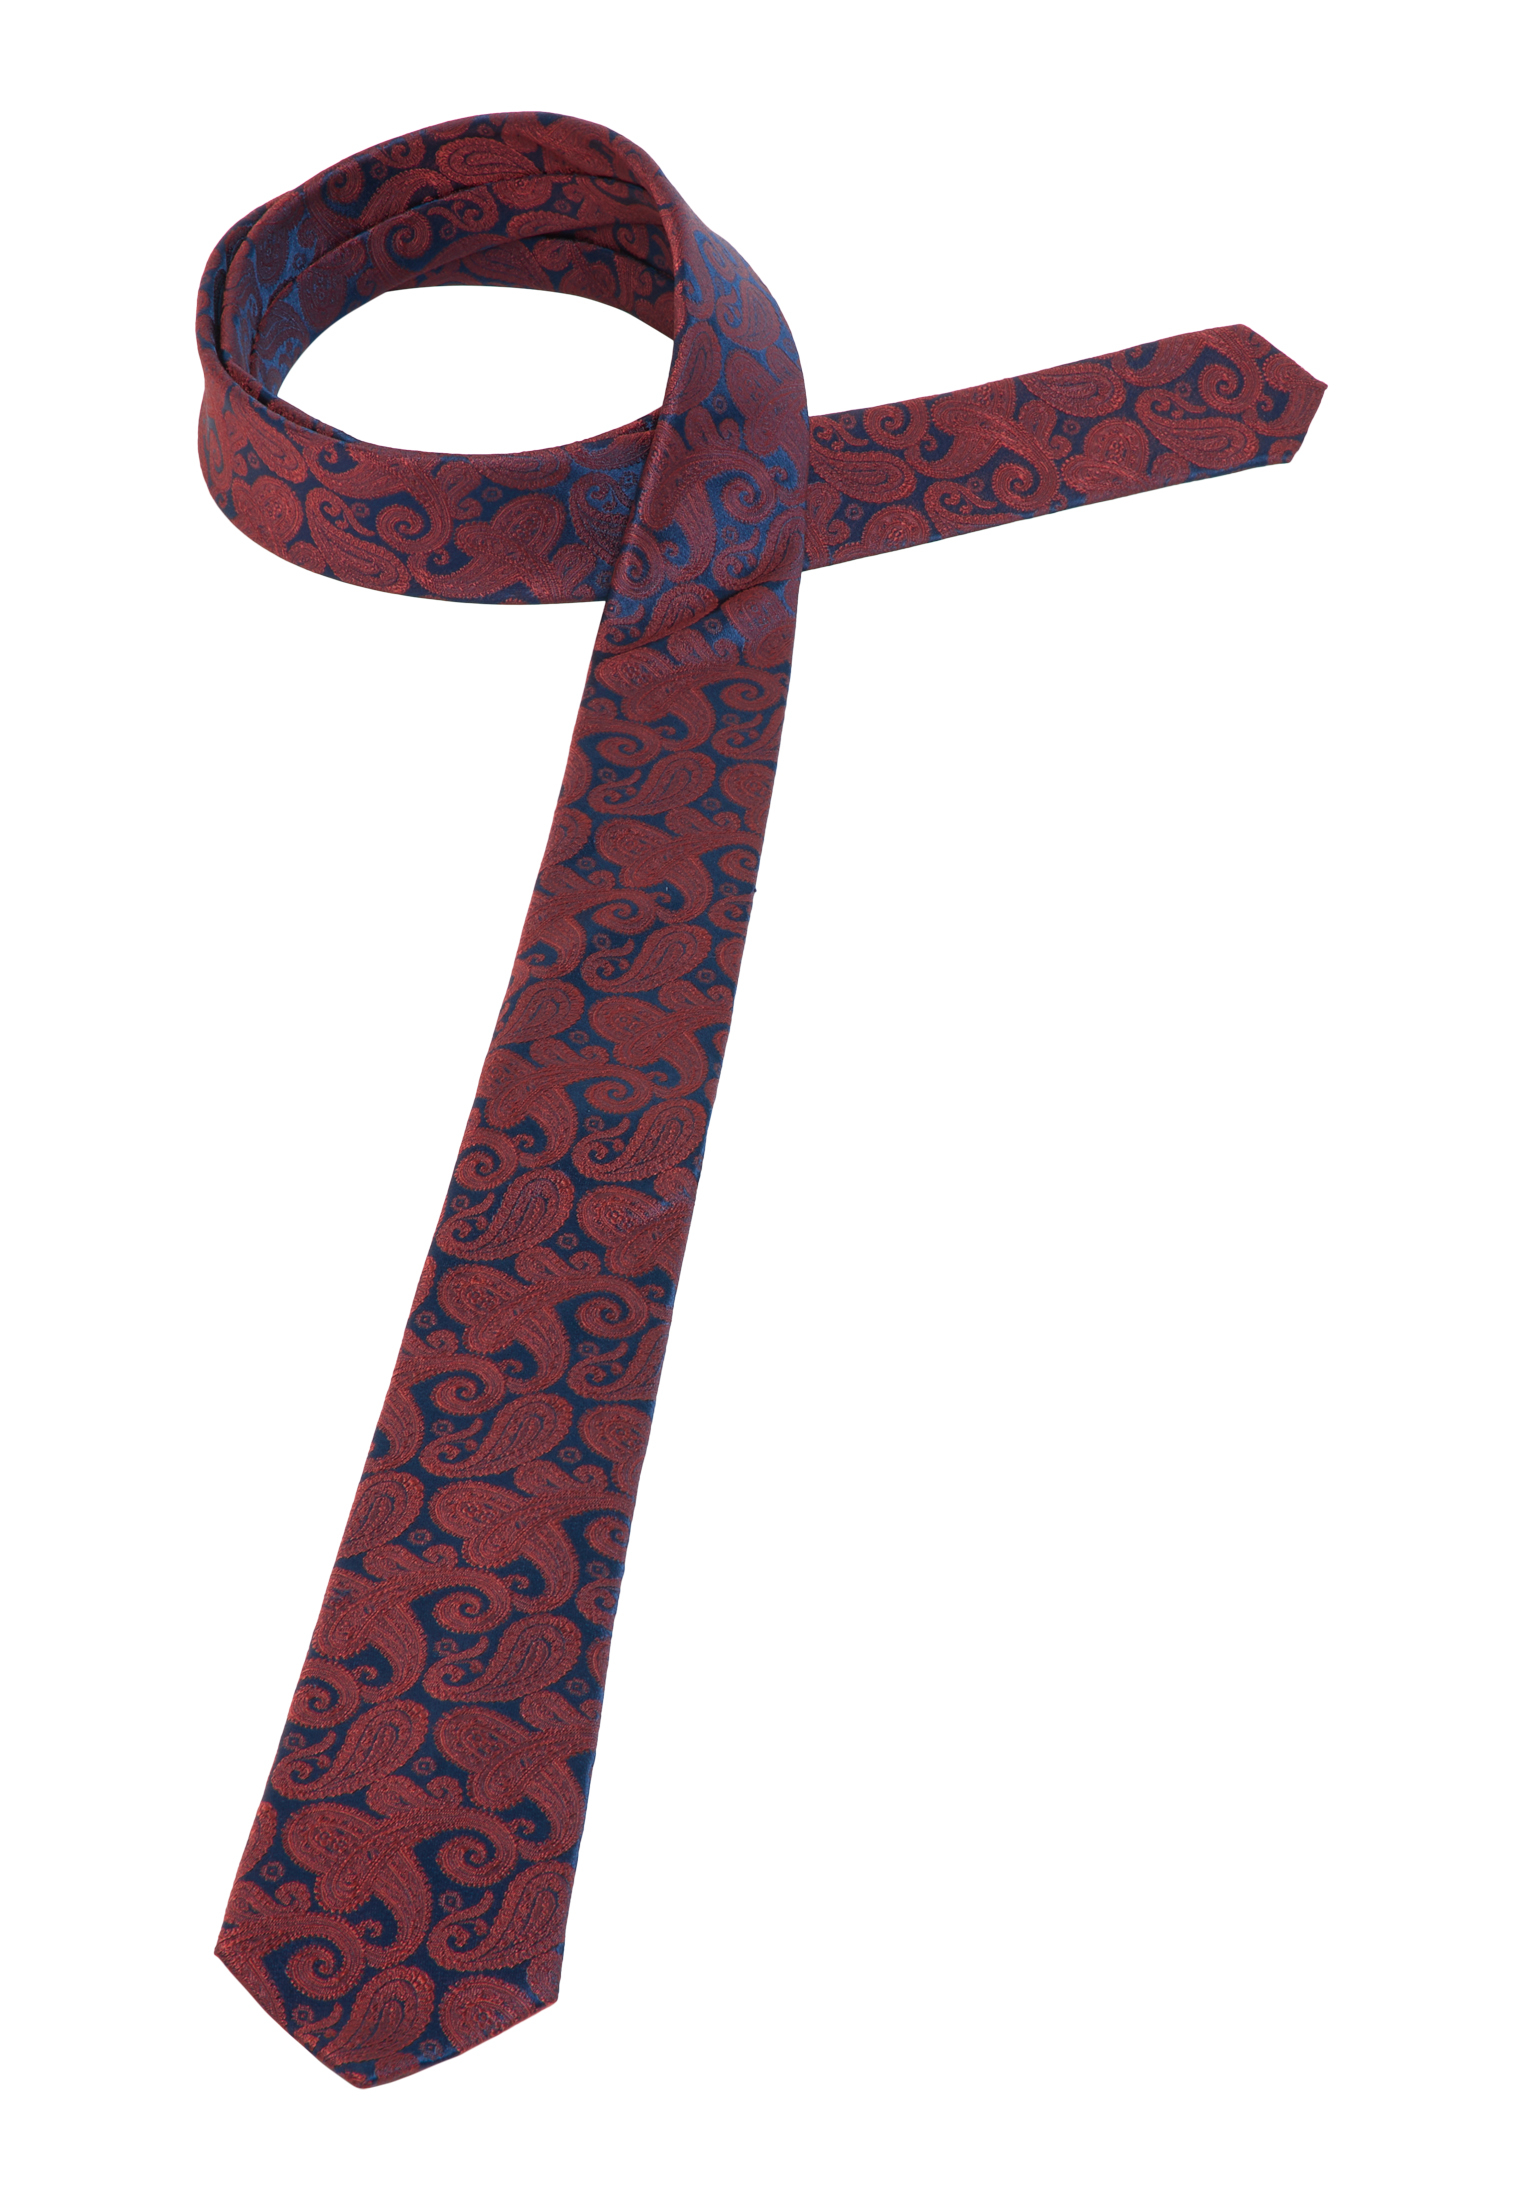 Krawatte in rusty 142 | gemustert | 1AC01904-05-63-142 red | red rusty